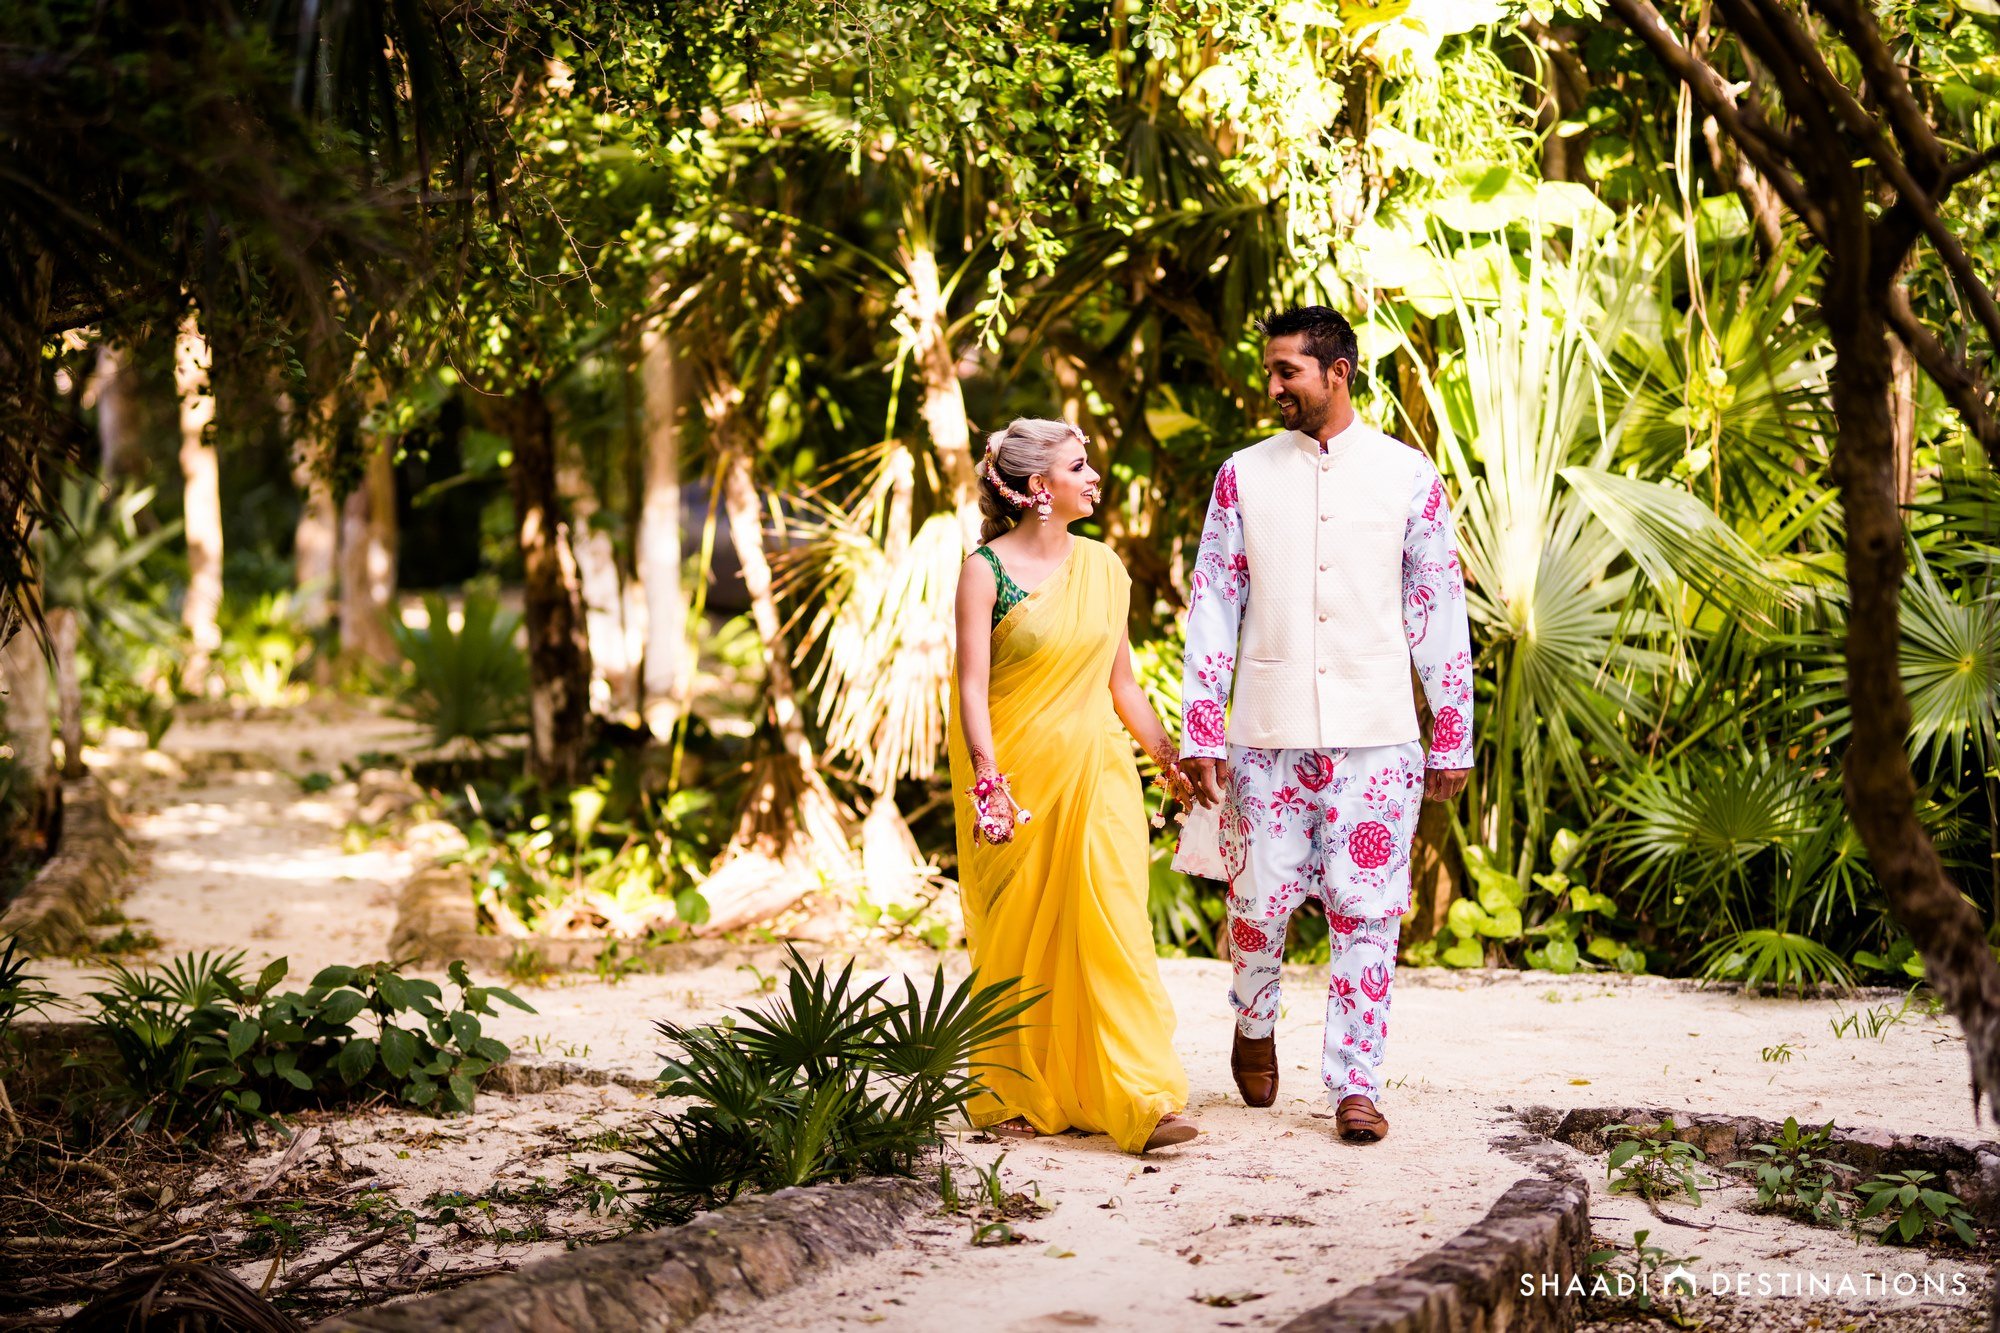 Jessica + Ronak - Hard Rock Riviera Maya - Indian Destination Wedding in Mexico - 8.jpg